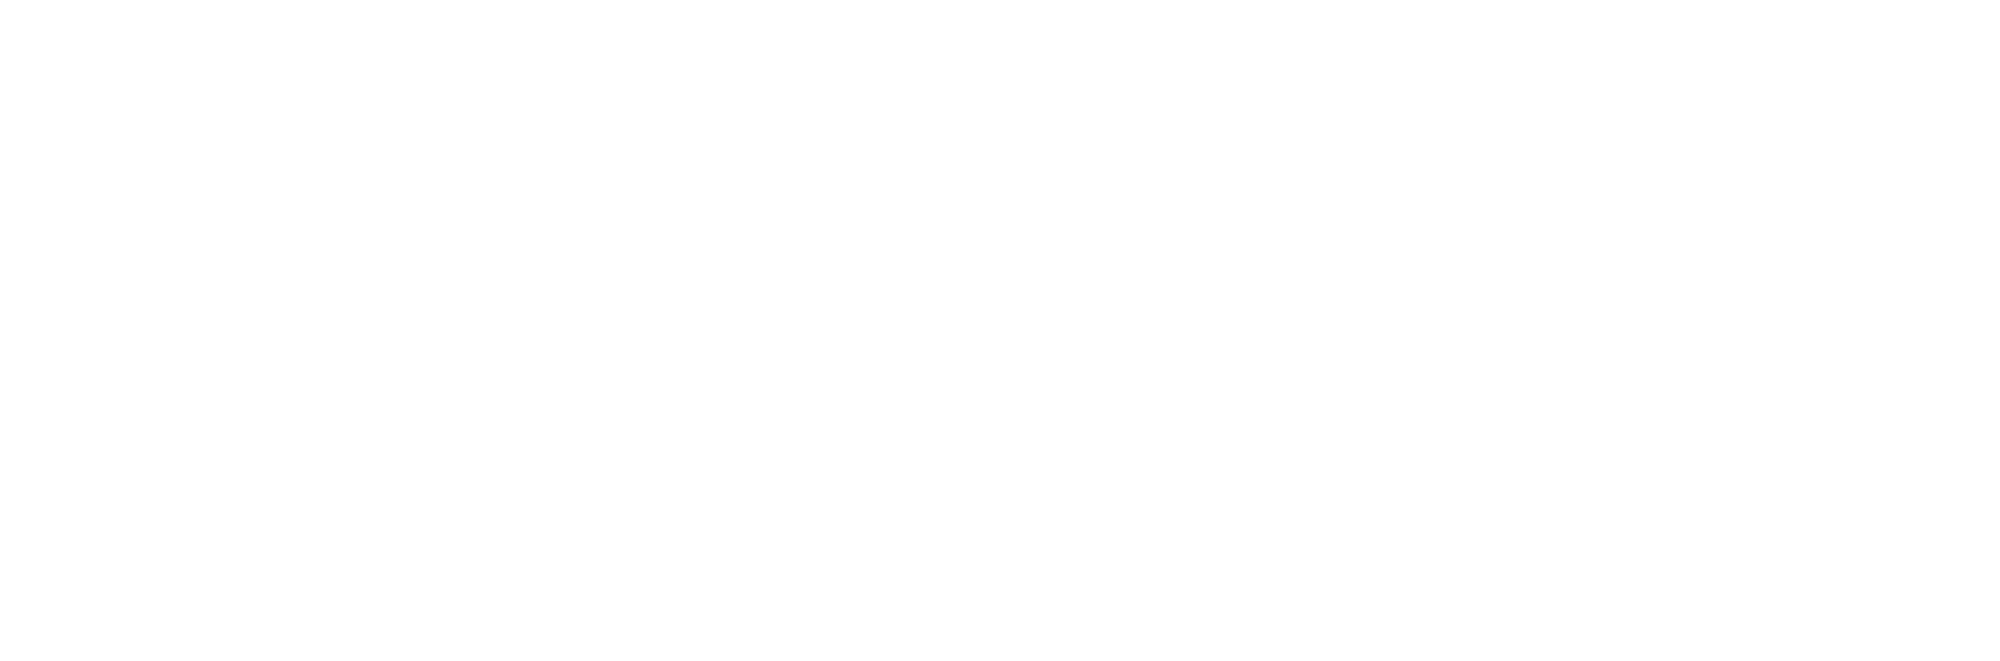 LG+TP Link+Delonghi+GfK_Weißgrau